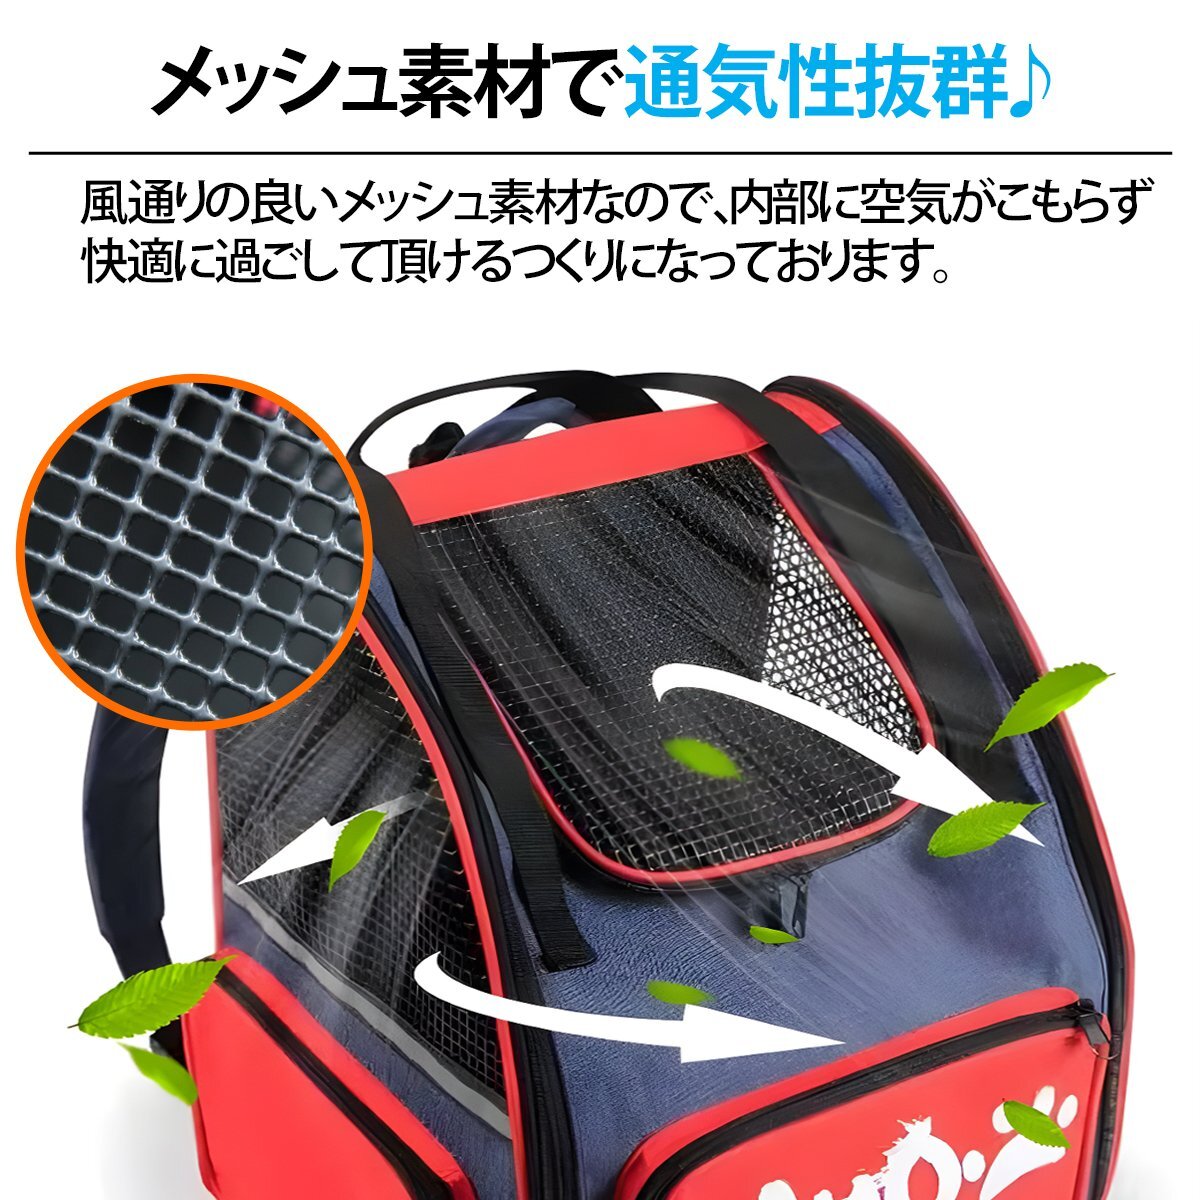 1 иен ~ распродажа домашнее животное Carry рюкзак 10kg домашнее животное сумка домашнее животное рюкзак рюкзак "дышит" кошка собака прогулка через . выход путешествие PR-01RD